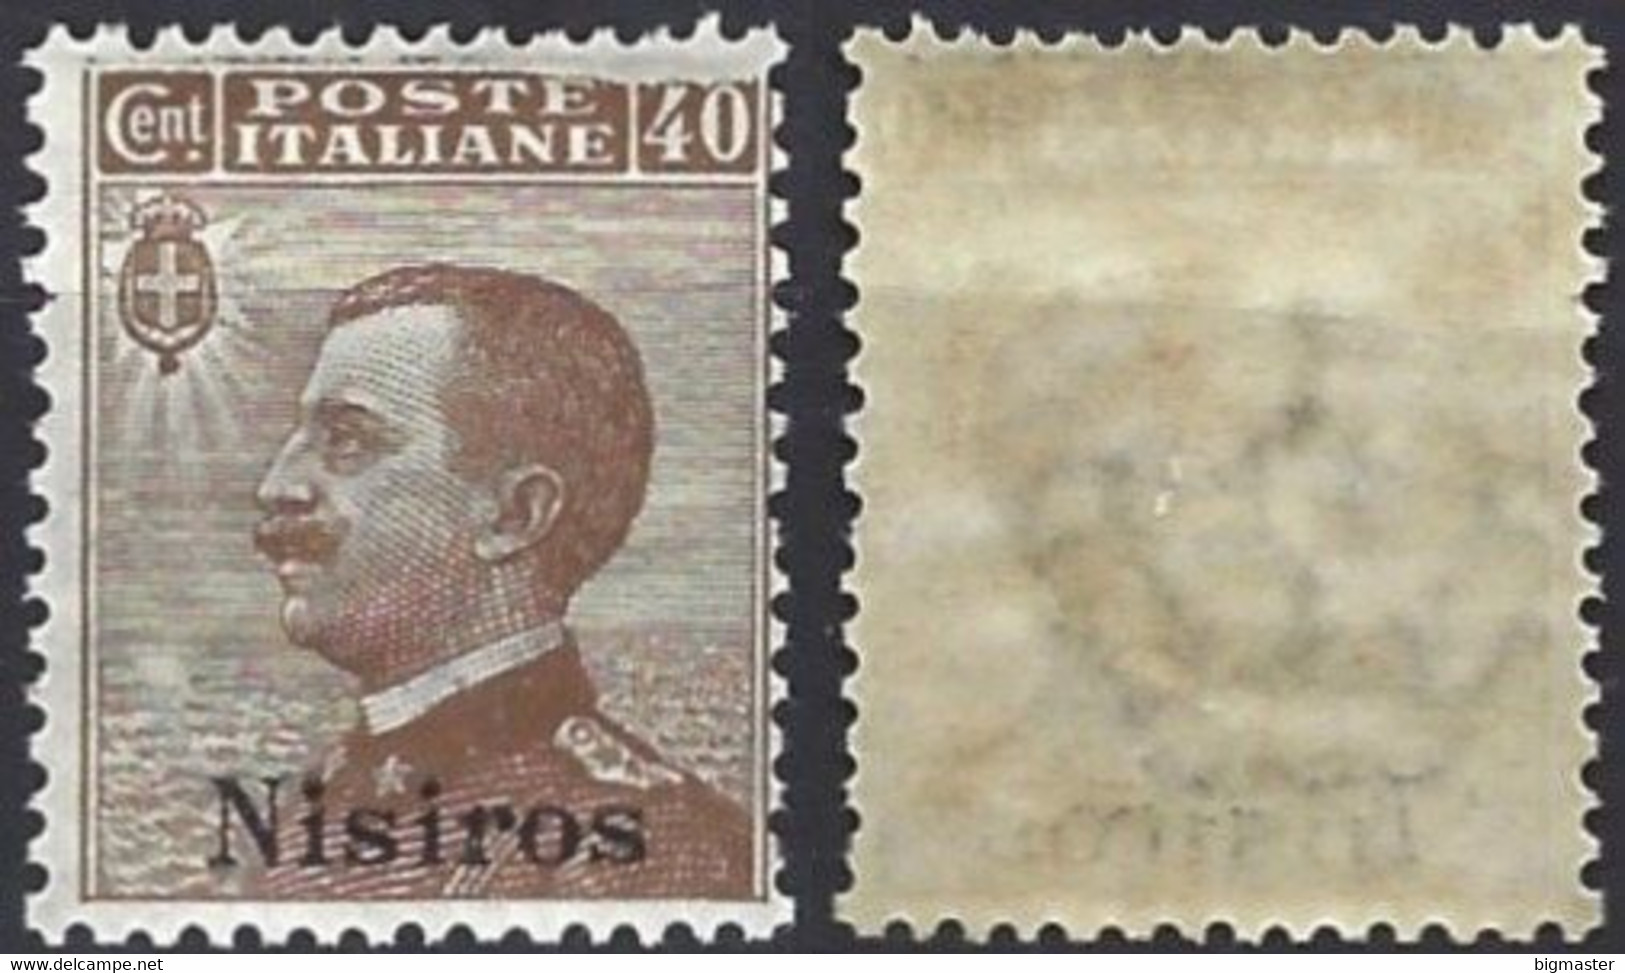 1912 Regno D'Italia IG 1912 IT-EG NI6 Franc Italia Soprast Nisiros New - Ägäis (Nisiro)